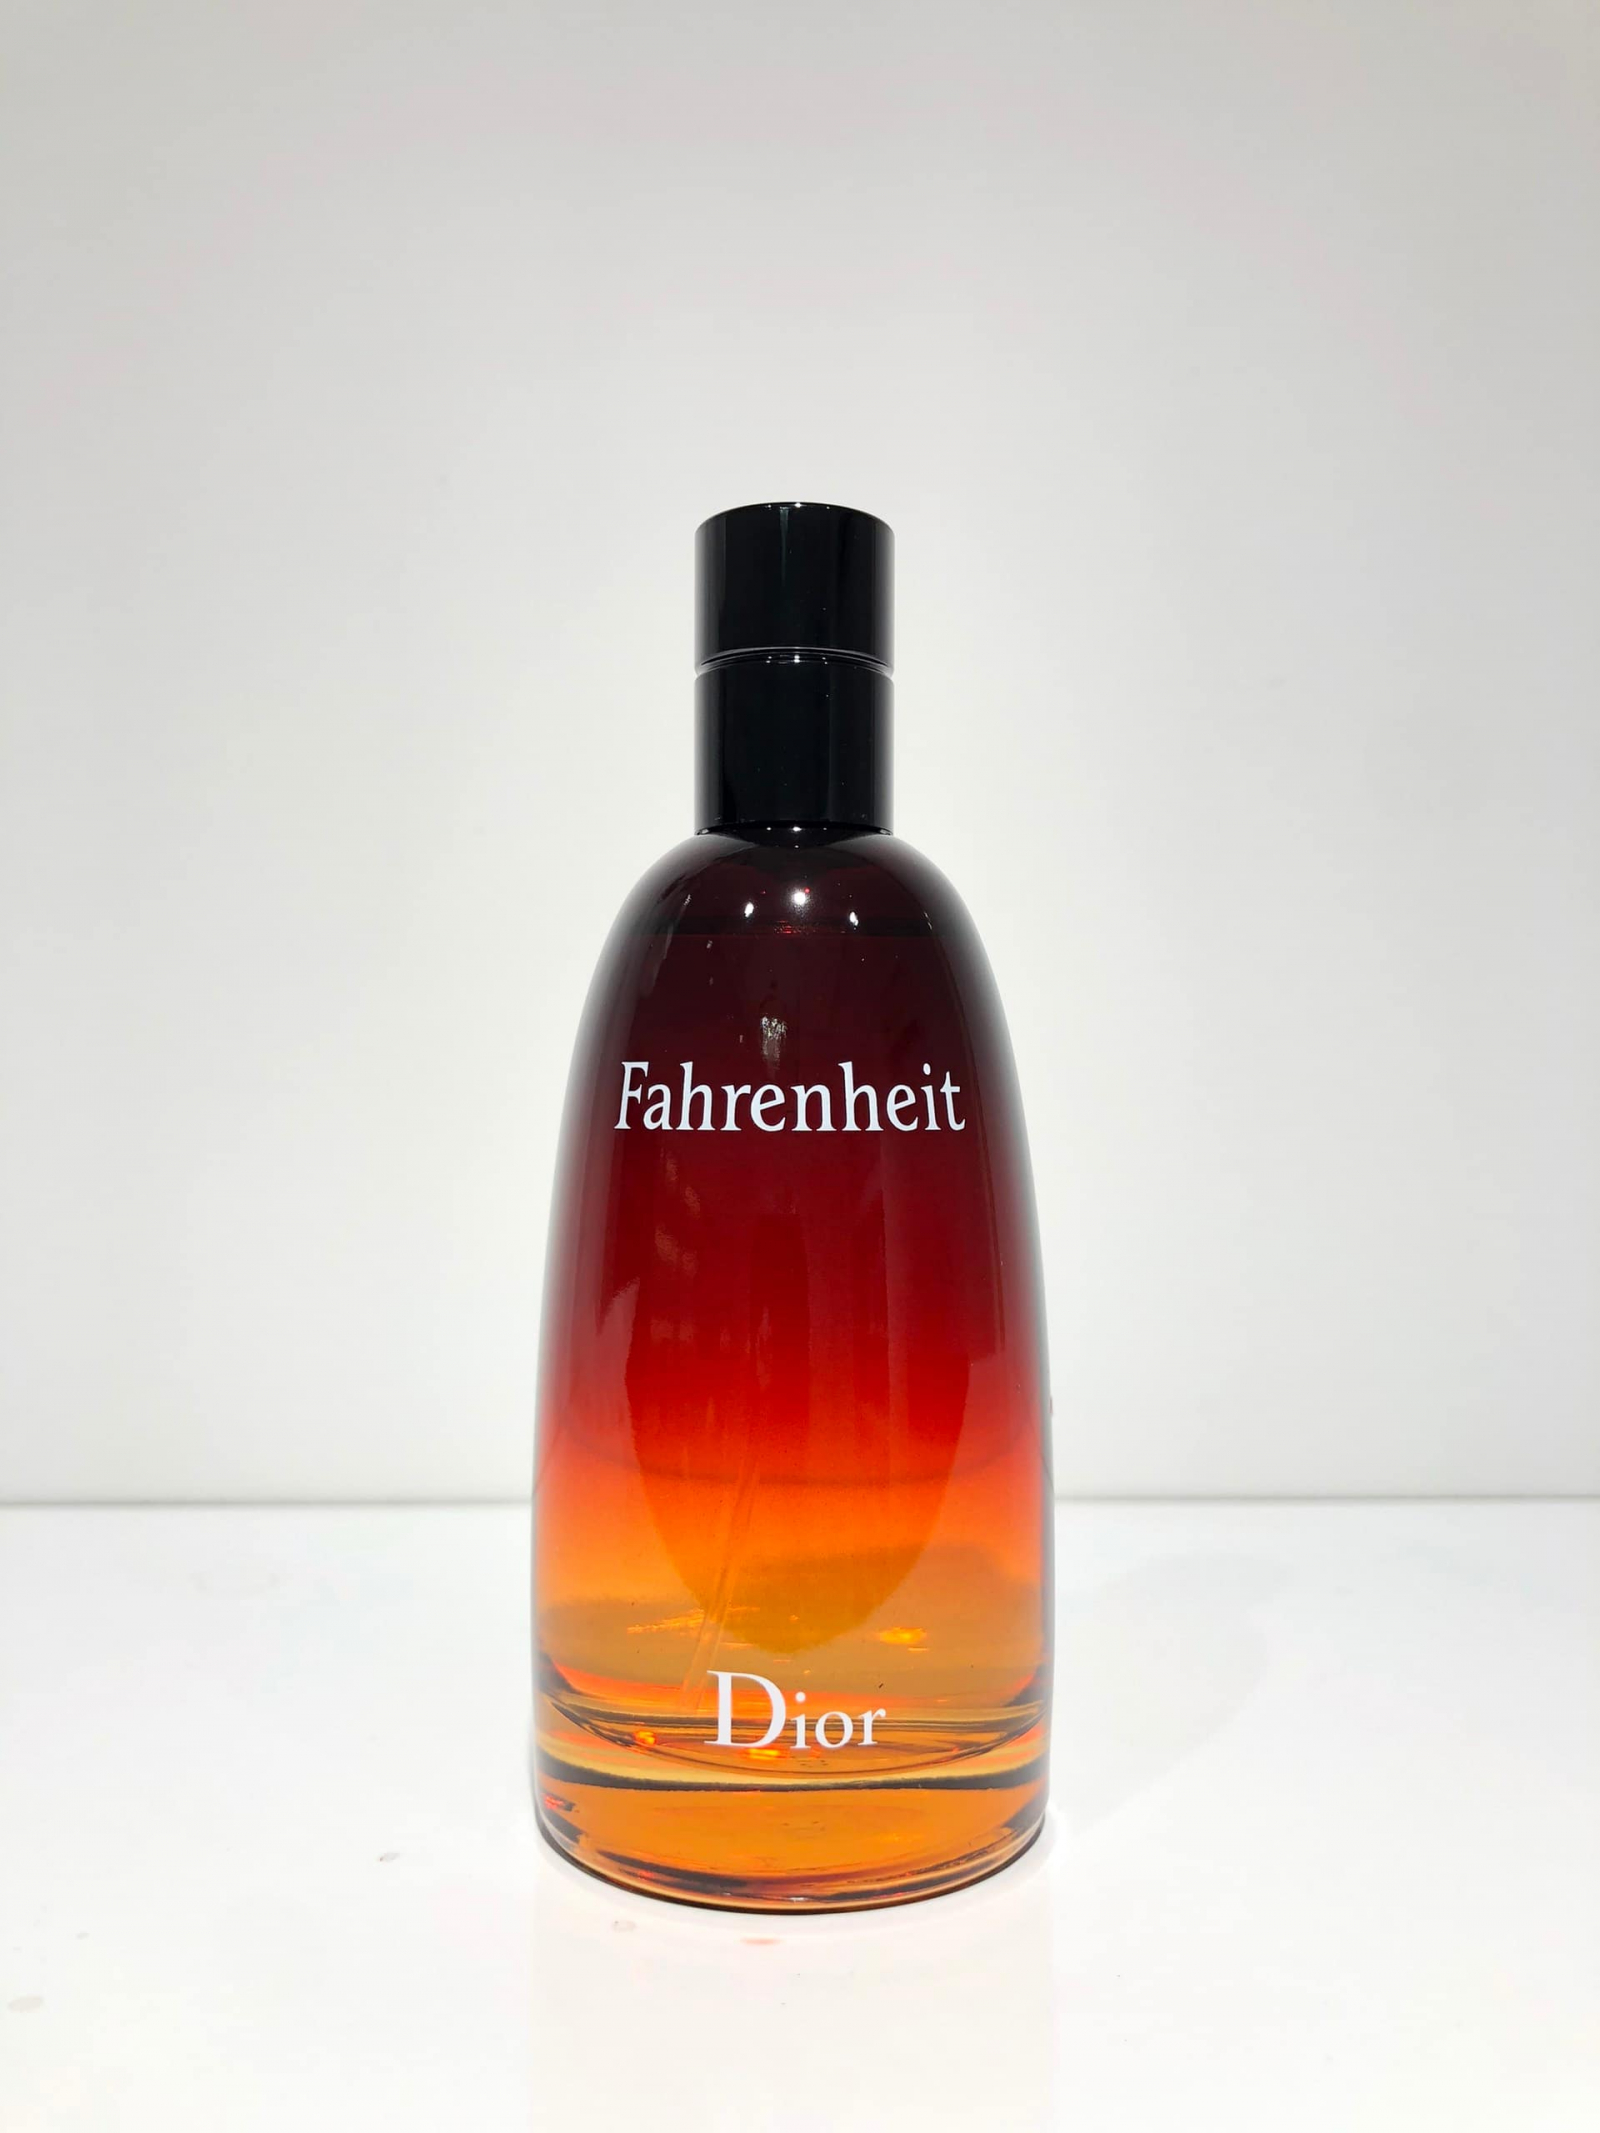 Dior Fahrenheit 50ml Page 1  Продаж та обмін ароматів  Fragrantica  Ukraine